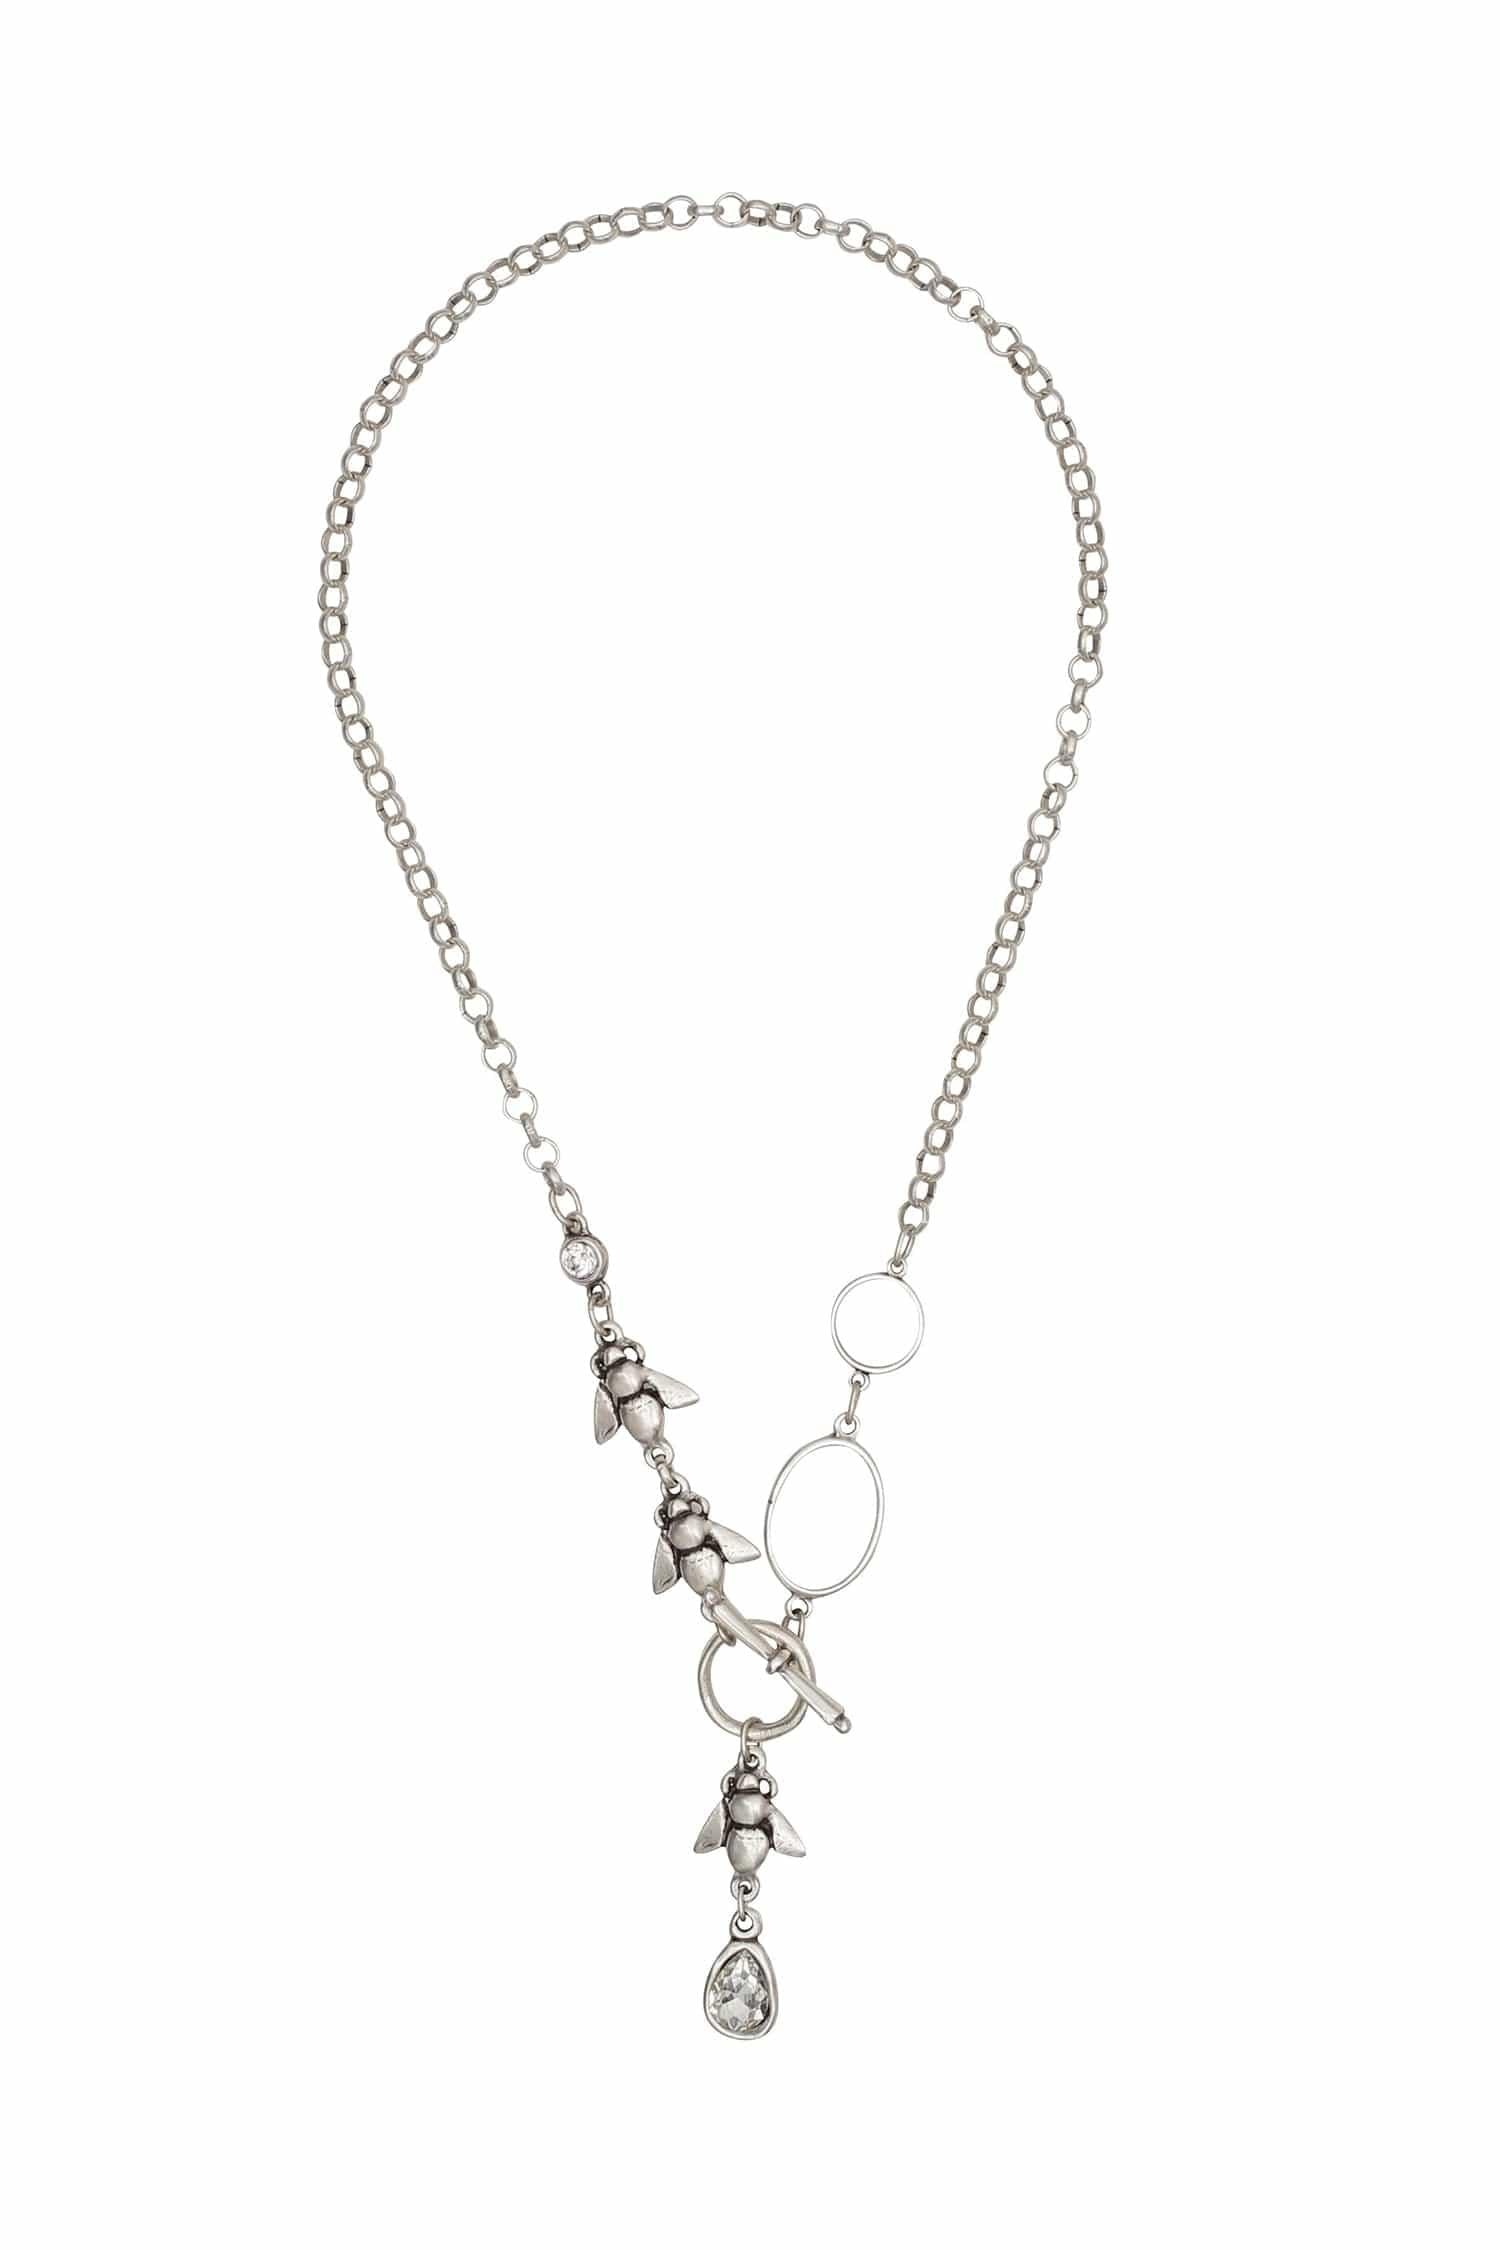 Chanour Jewelry JELAVU Necklace with Crystal NN3554